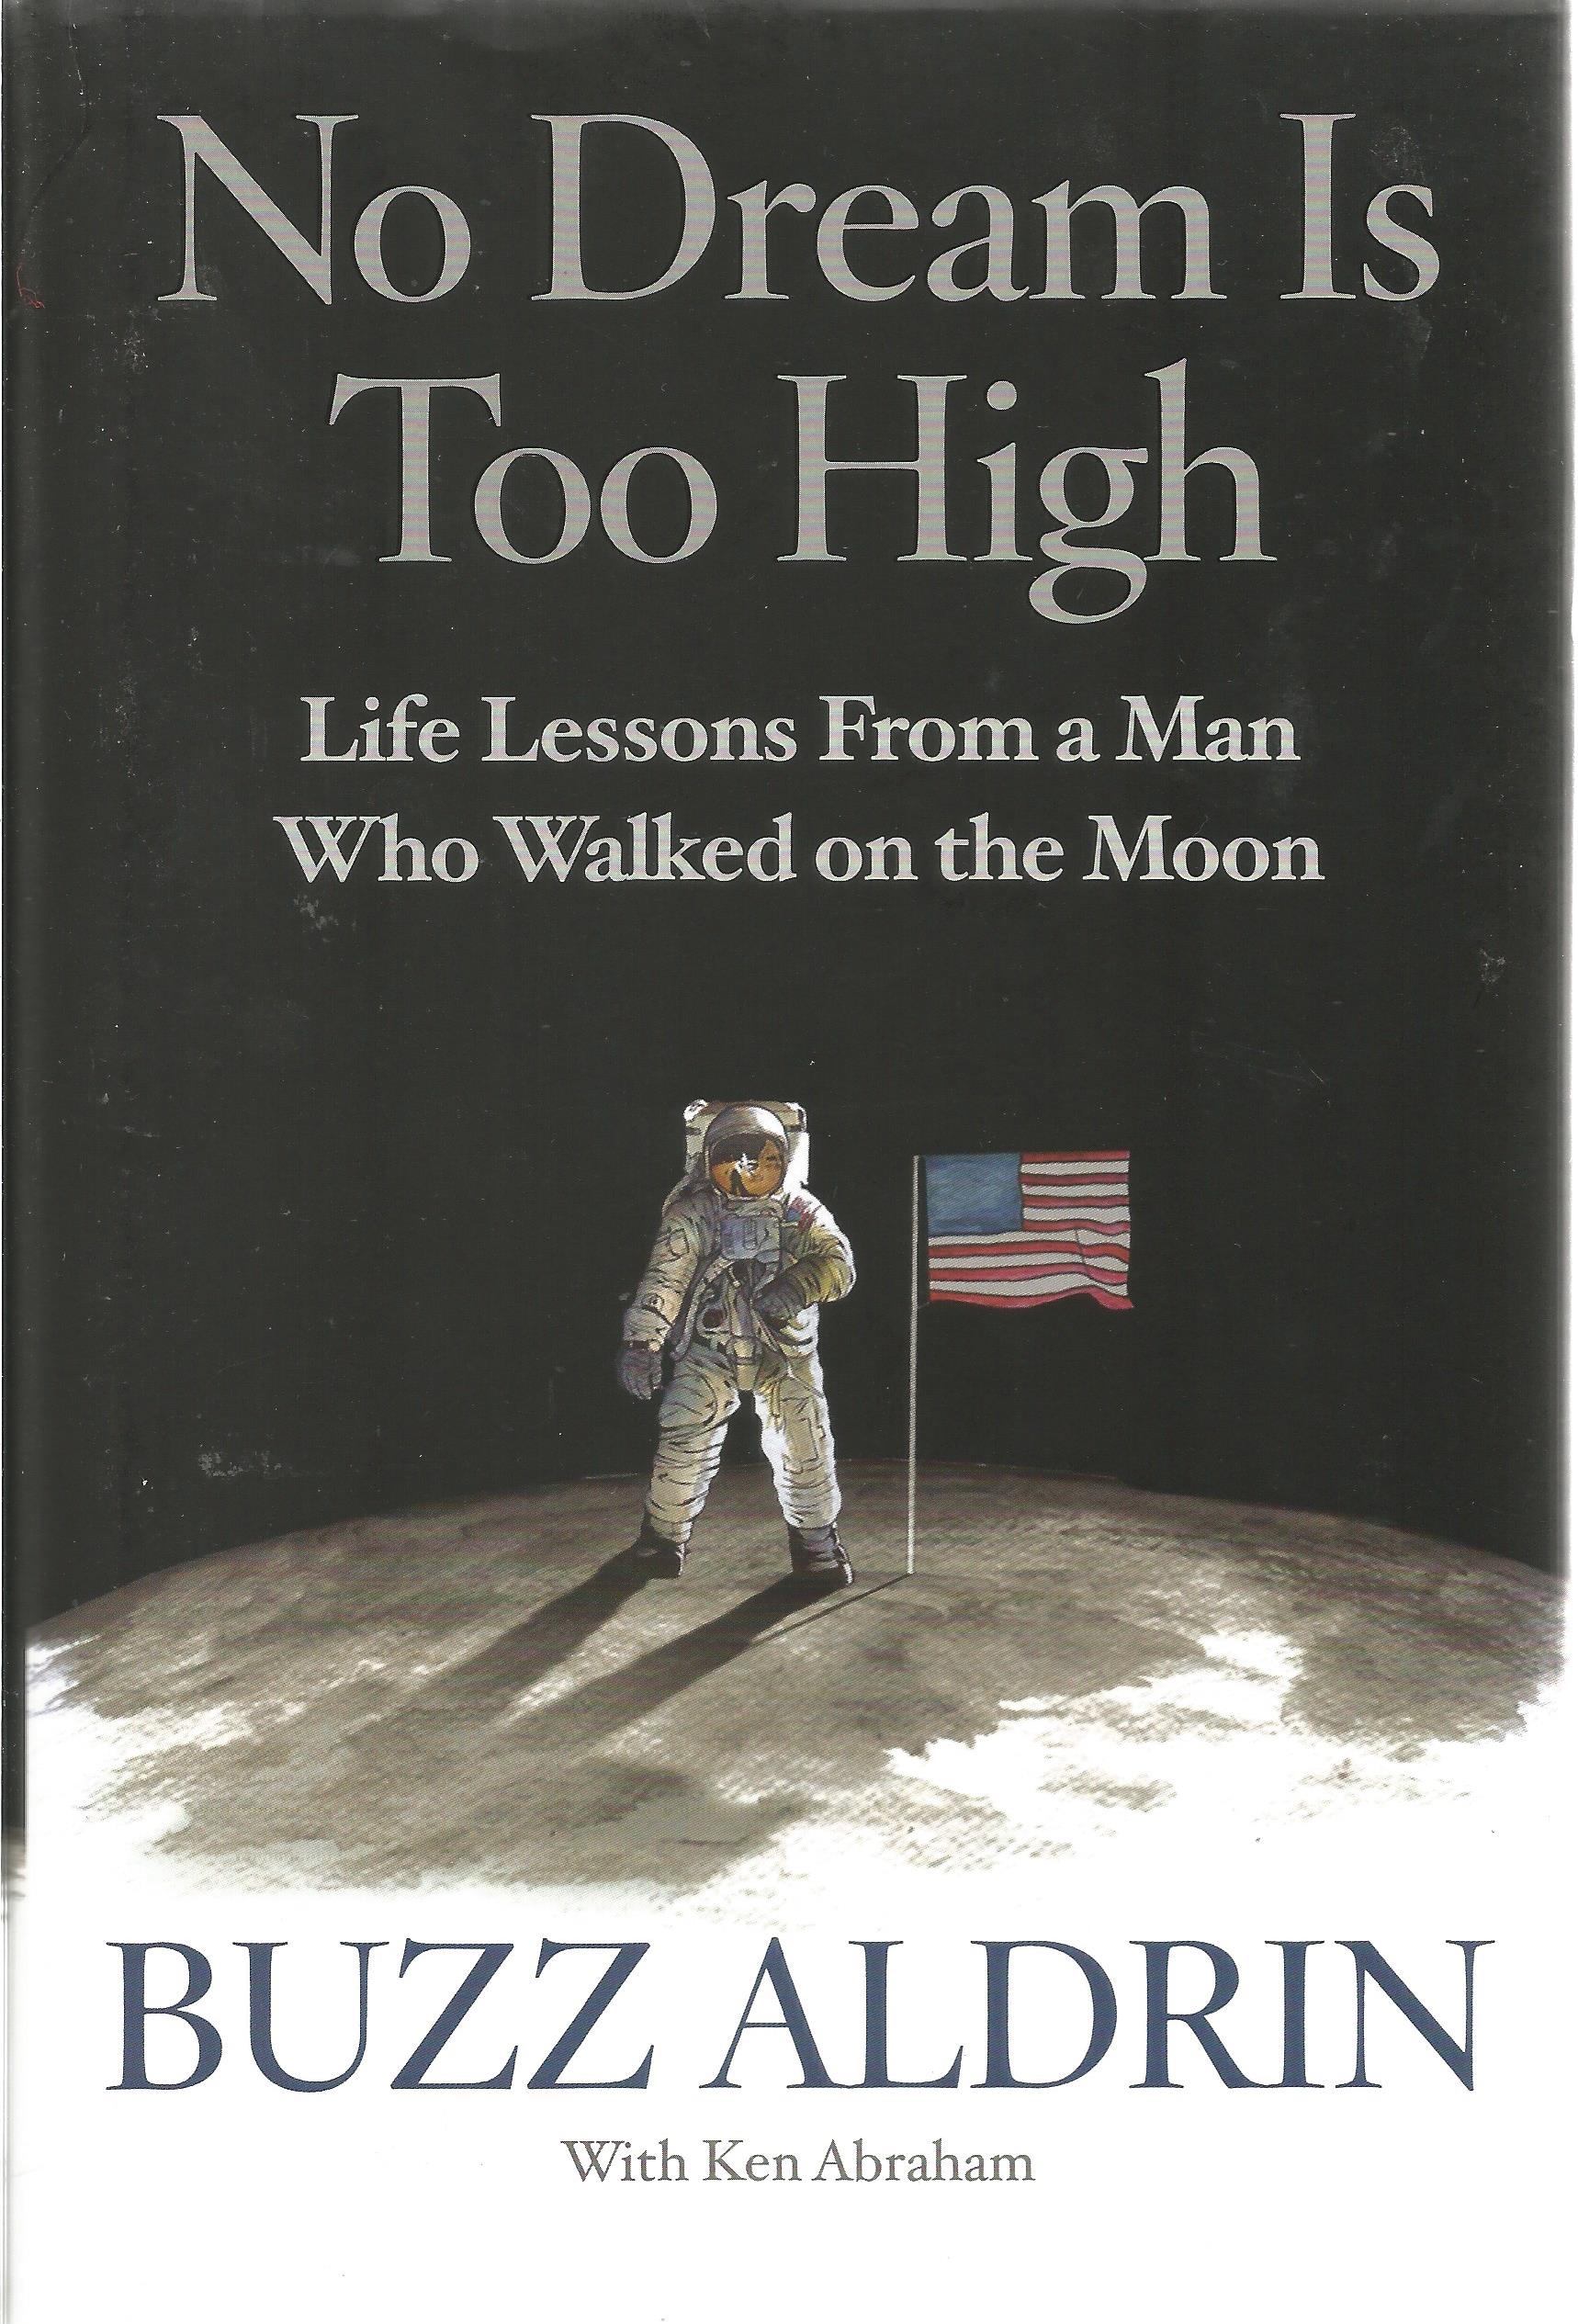 Apollo X1 Buzz Aldrin Moonwalker astronaut signed hardback book No Dream is too High. Good